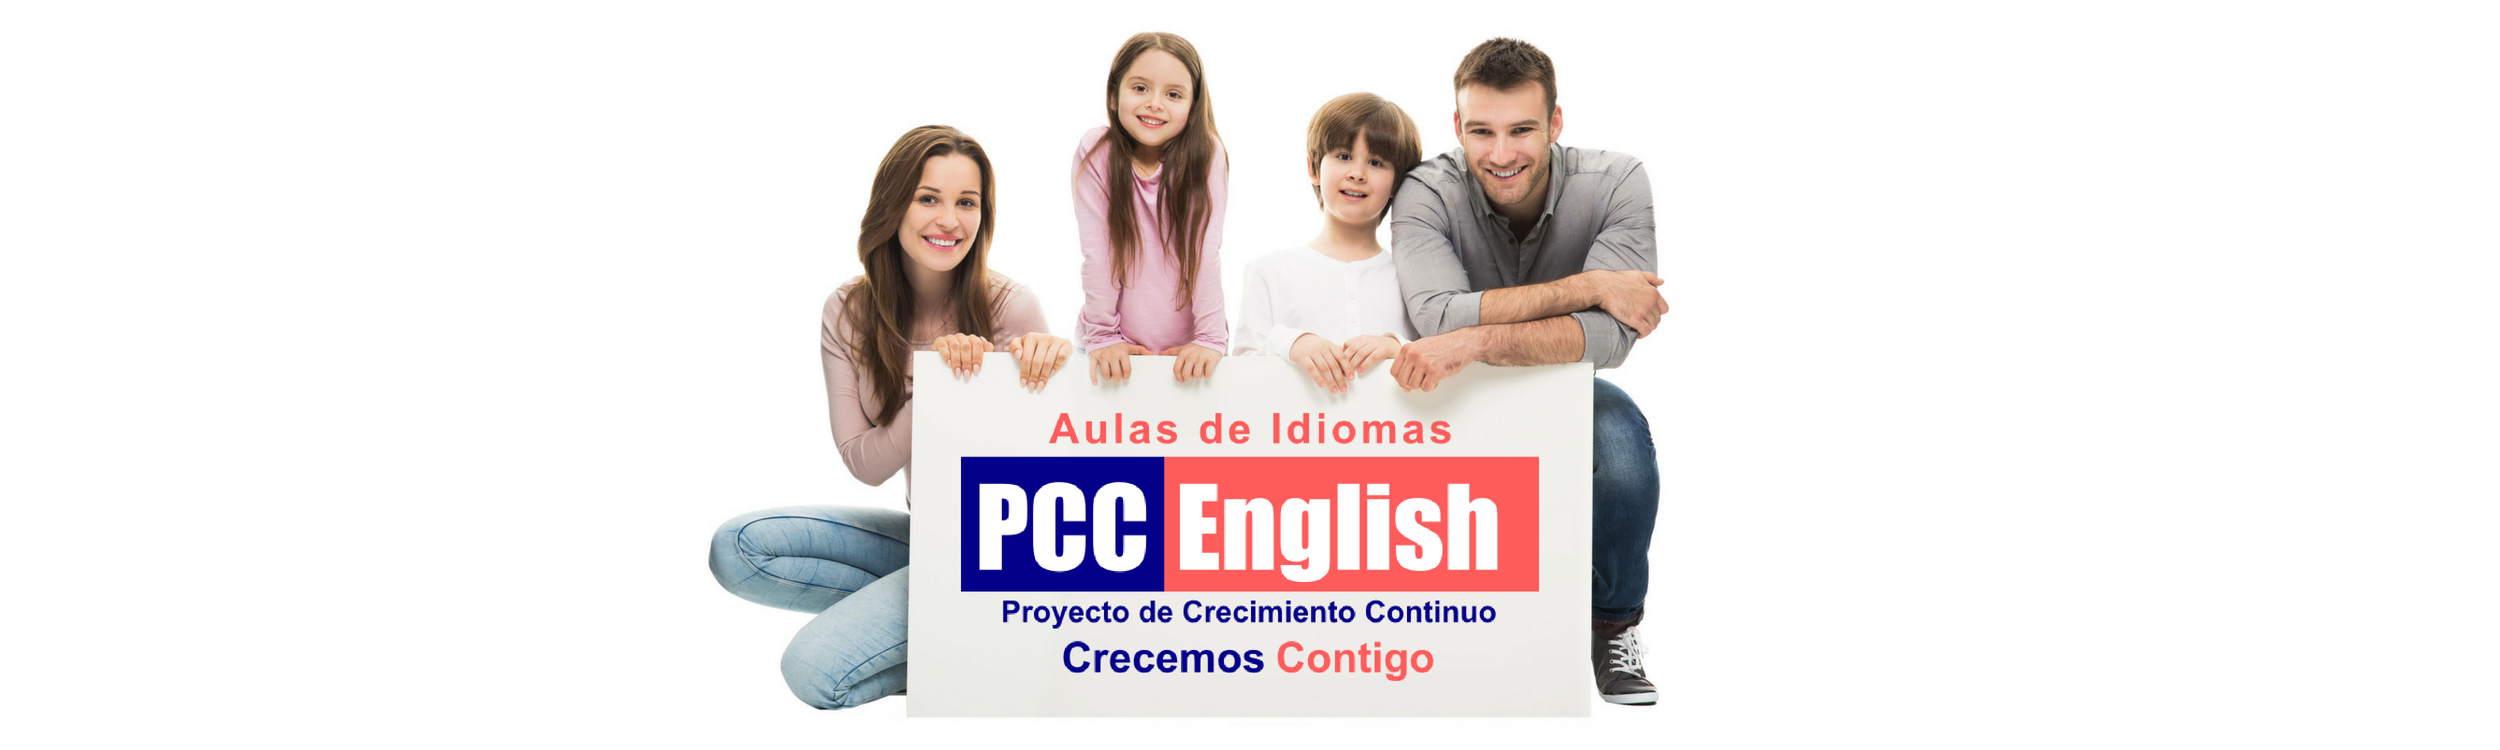 Cabecera PCC English